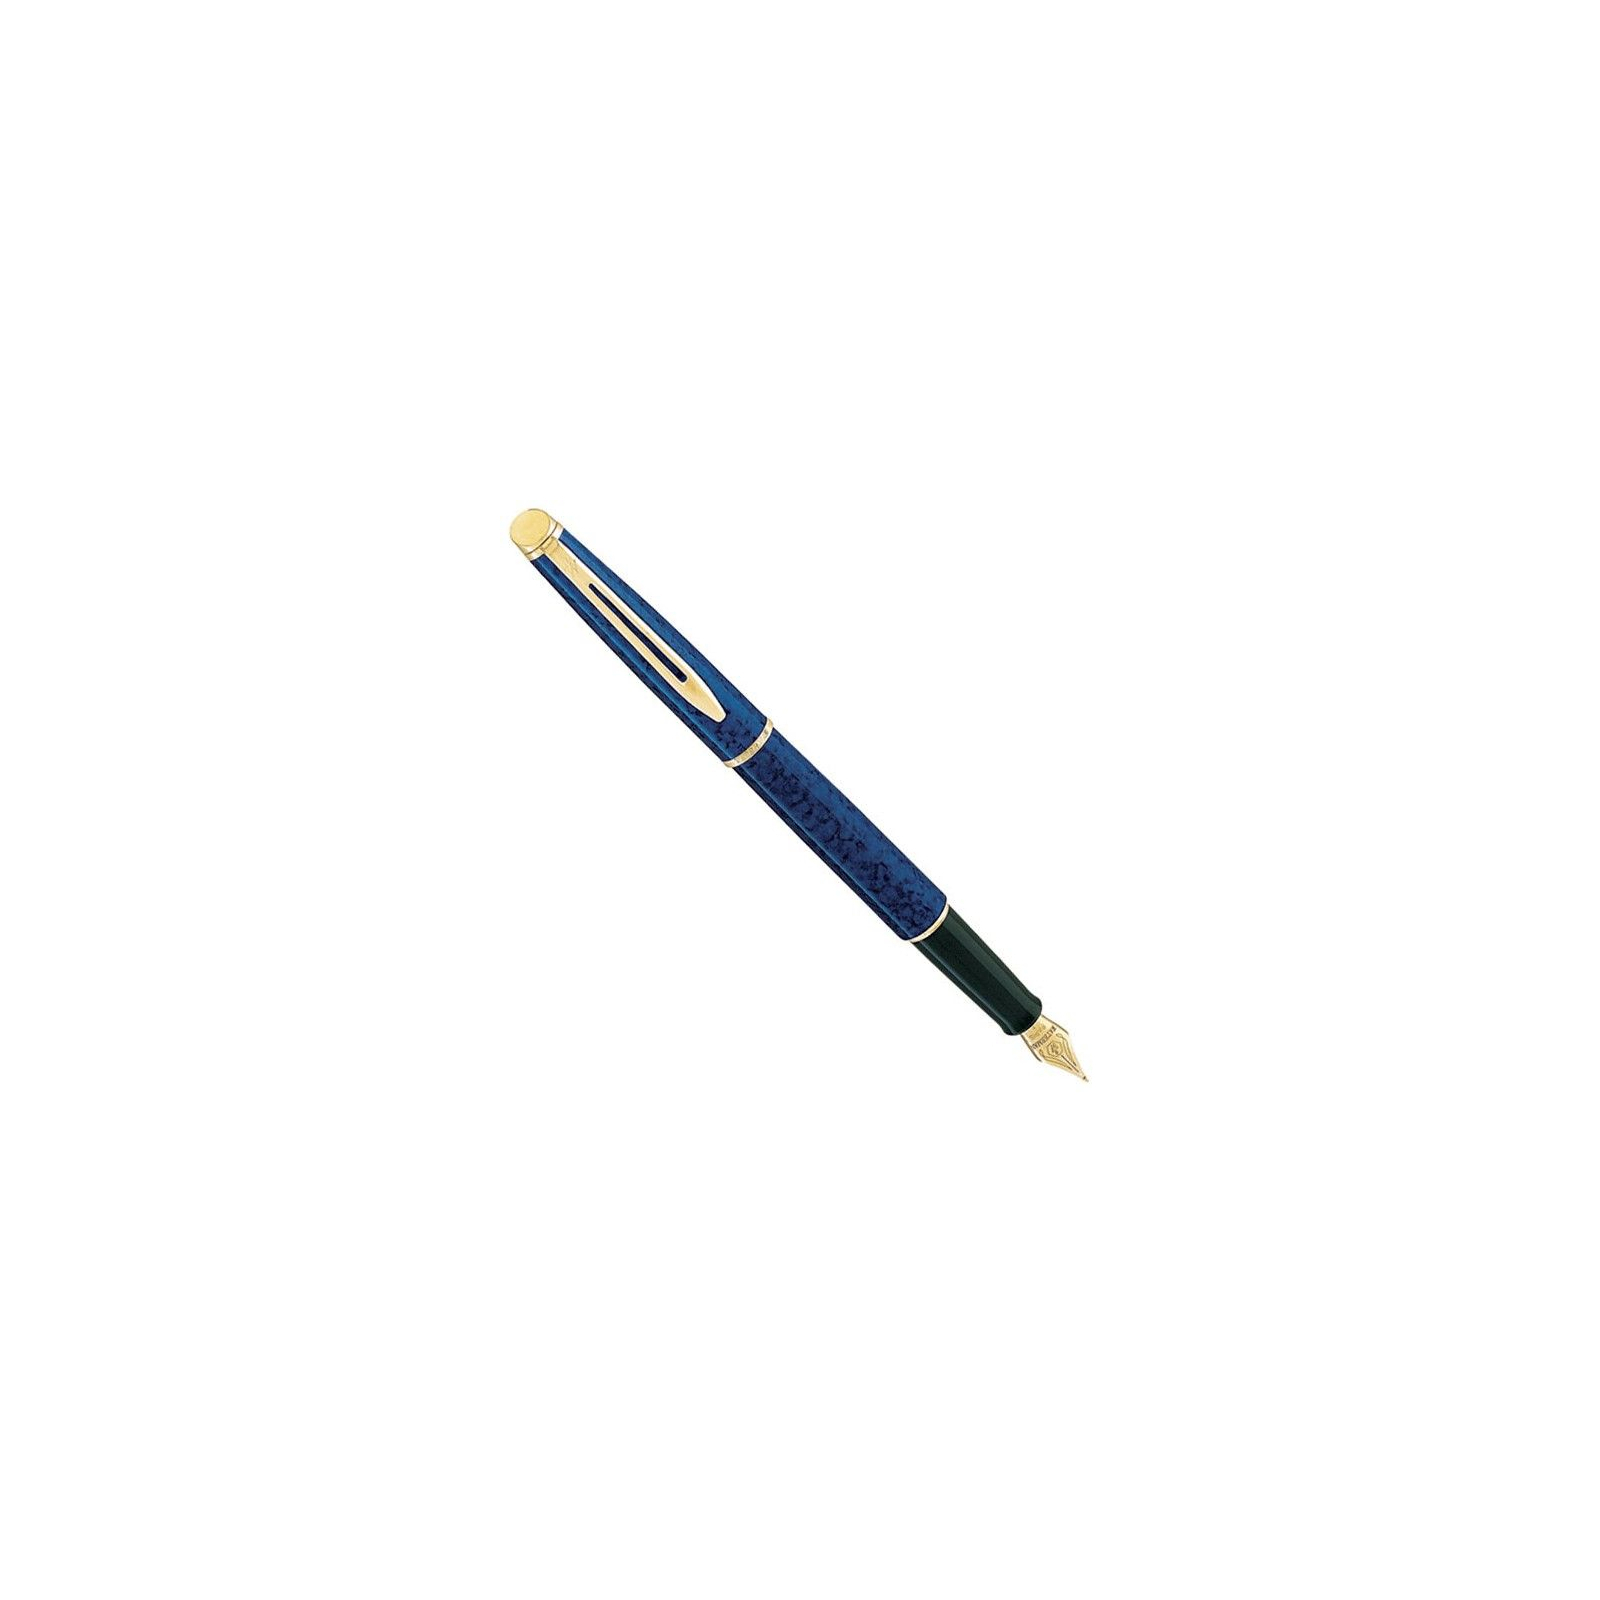 Ручка перьевая Waterman Hemisphere (12051)